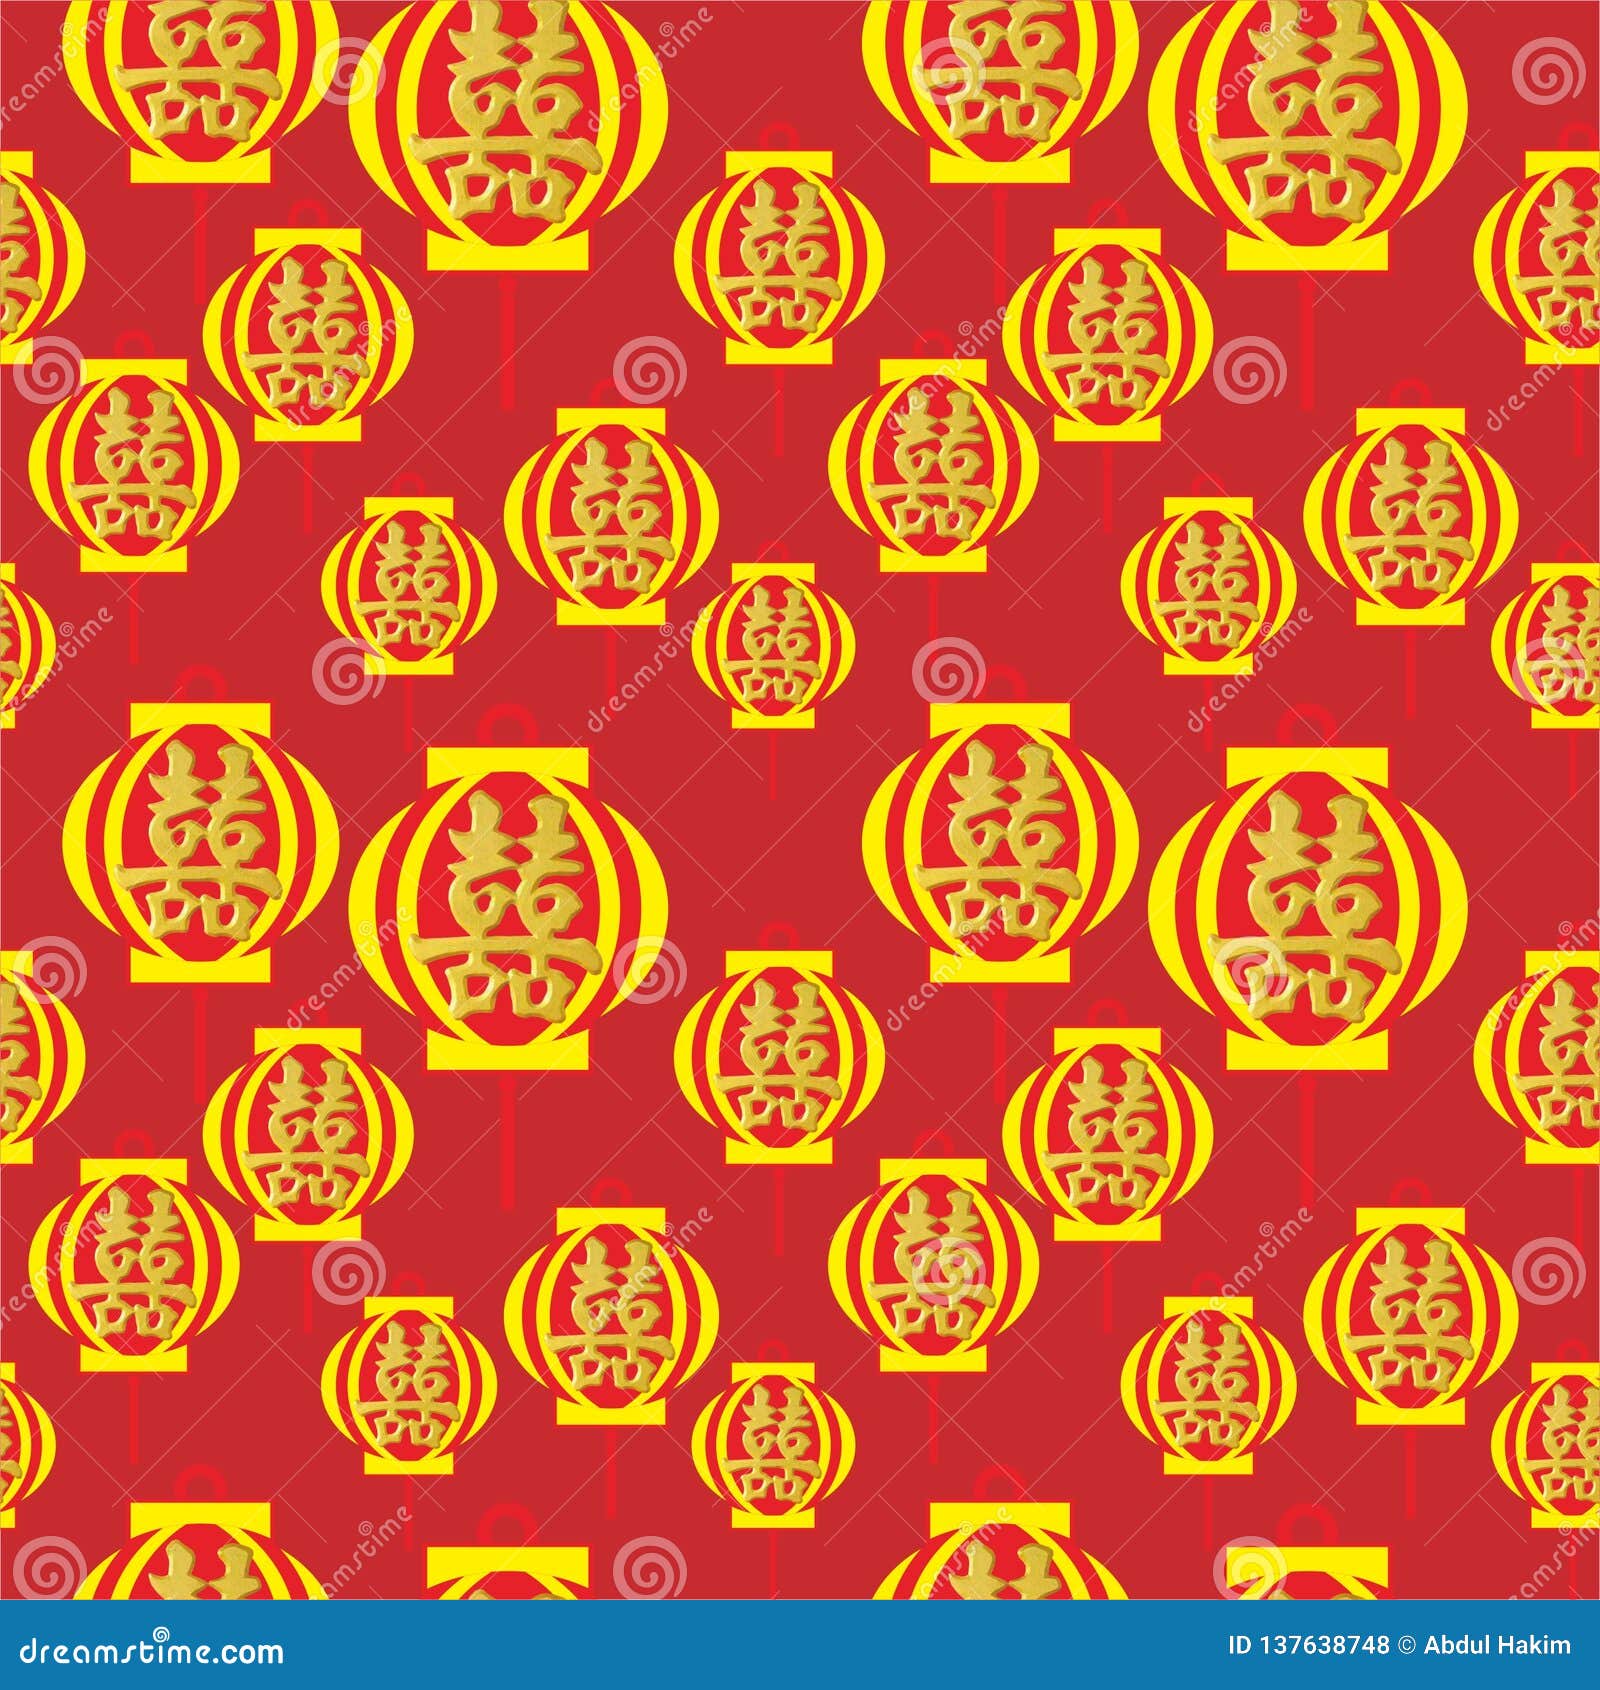  and bitmap imlek gong xi fa cai background pattern red